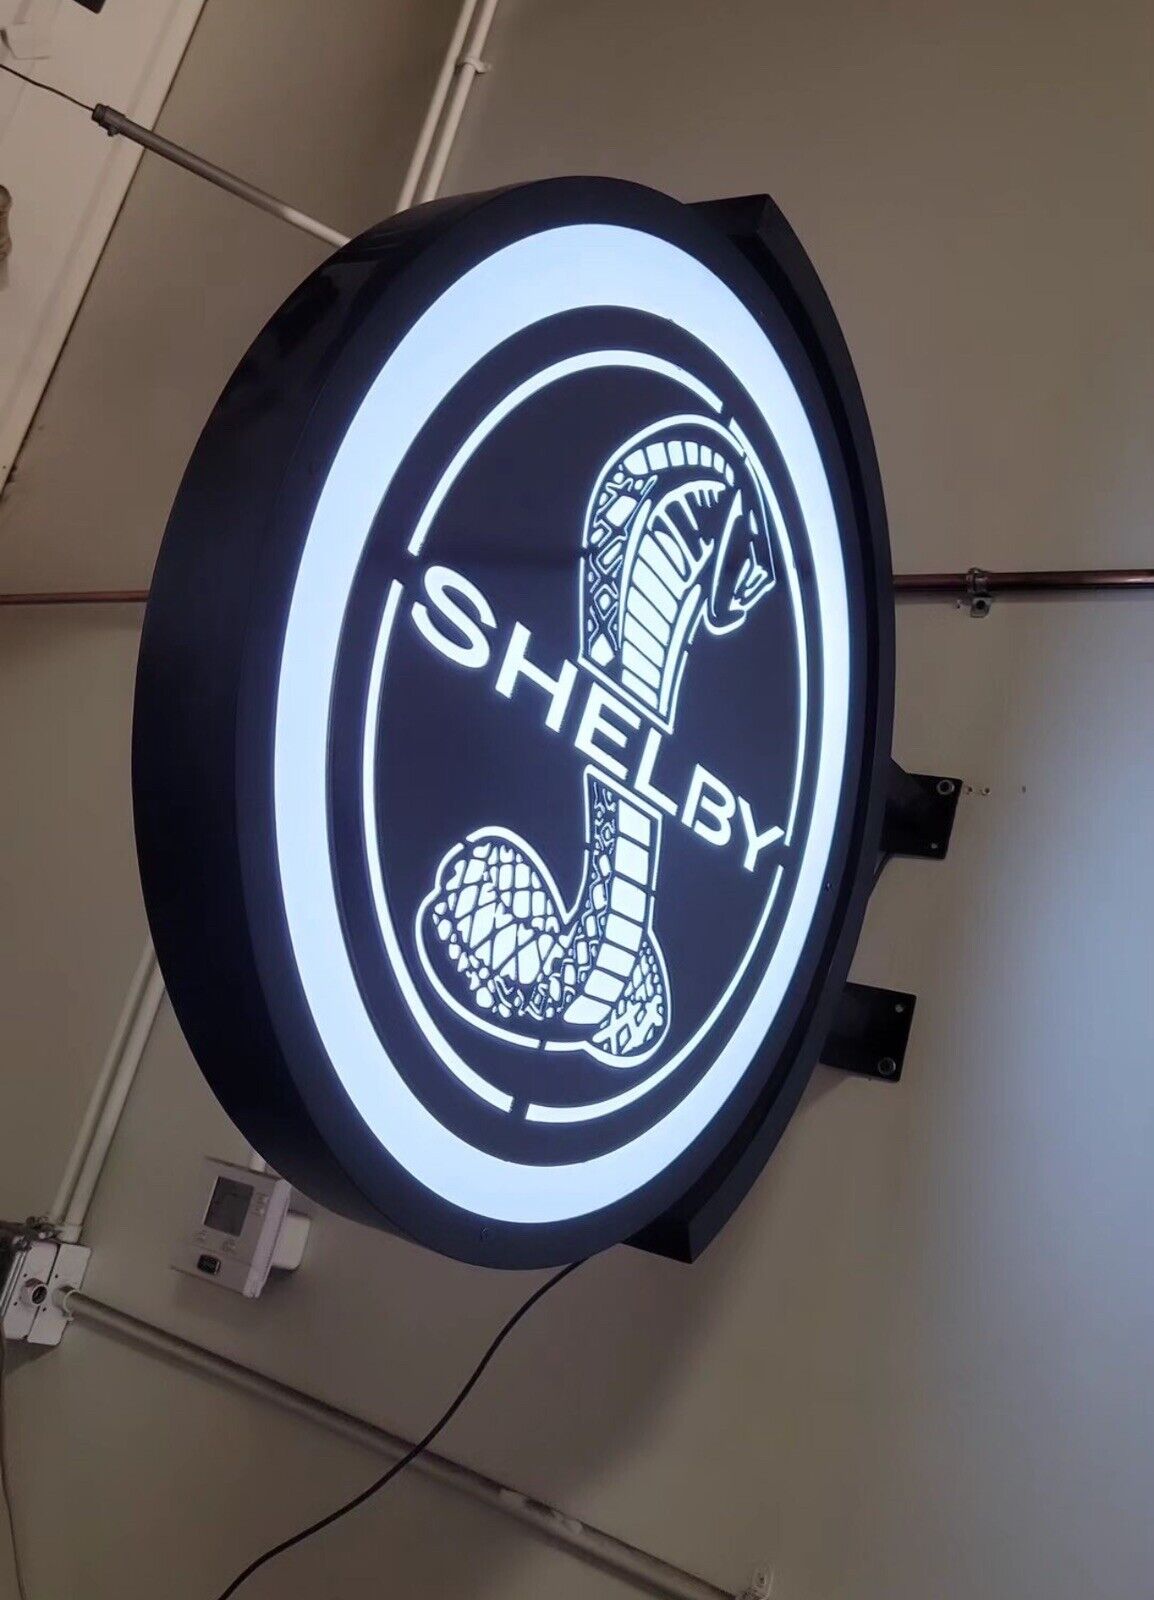 Officially licensed Metal Black Shelby Backlit LED Light 24x24”